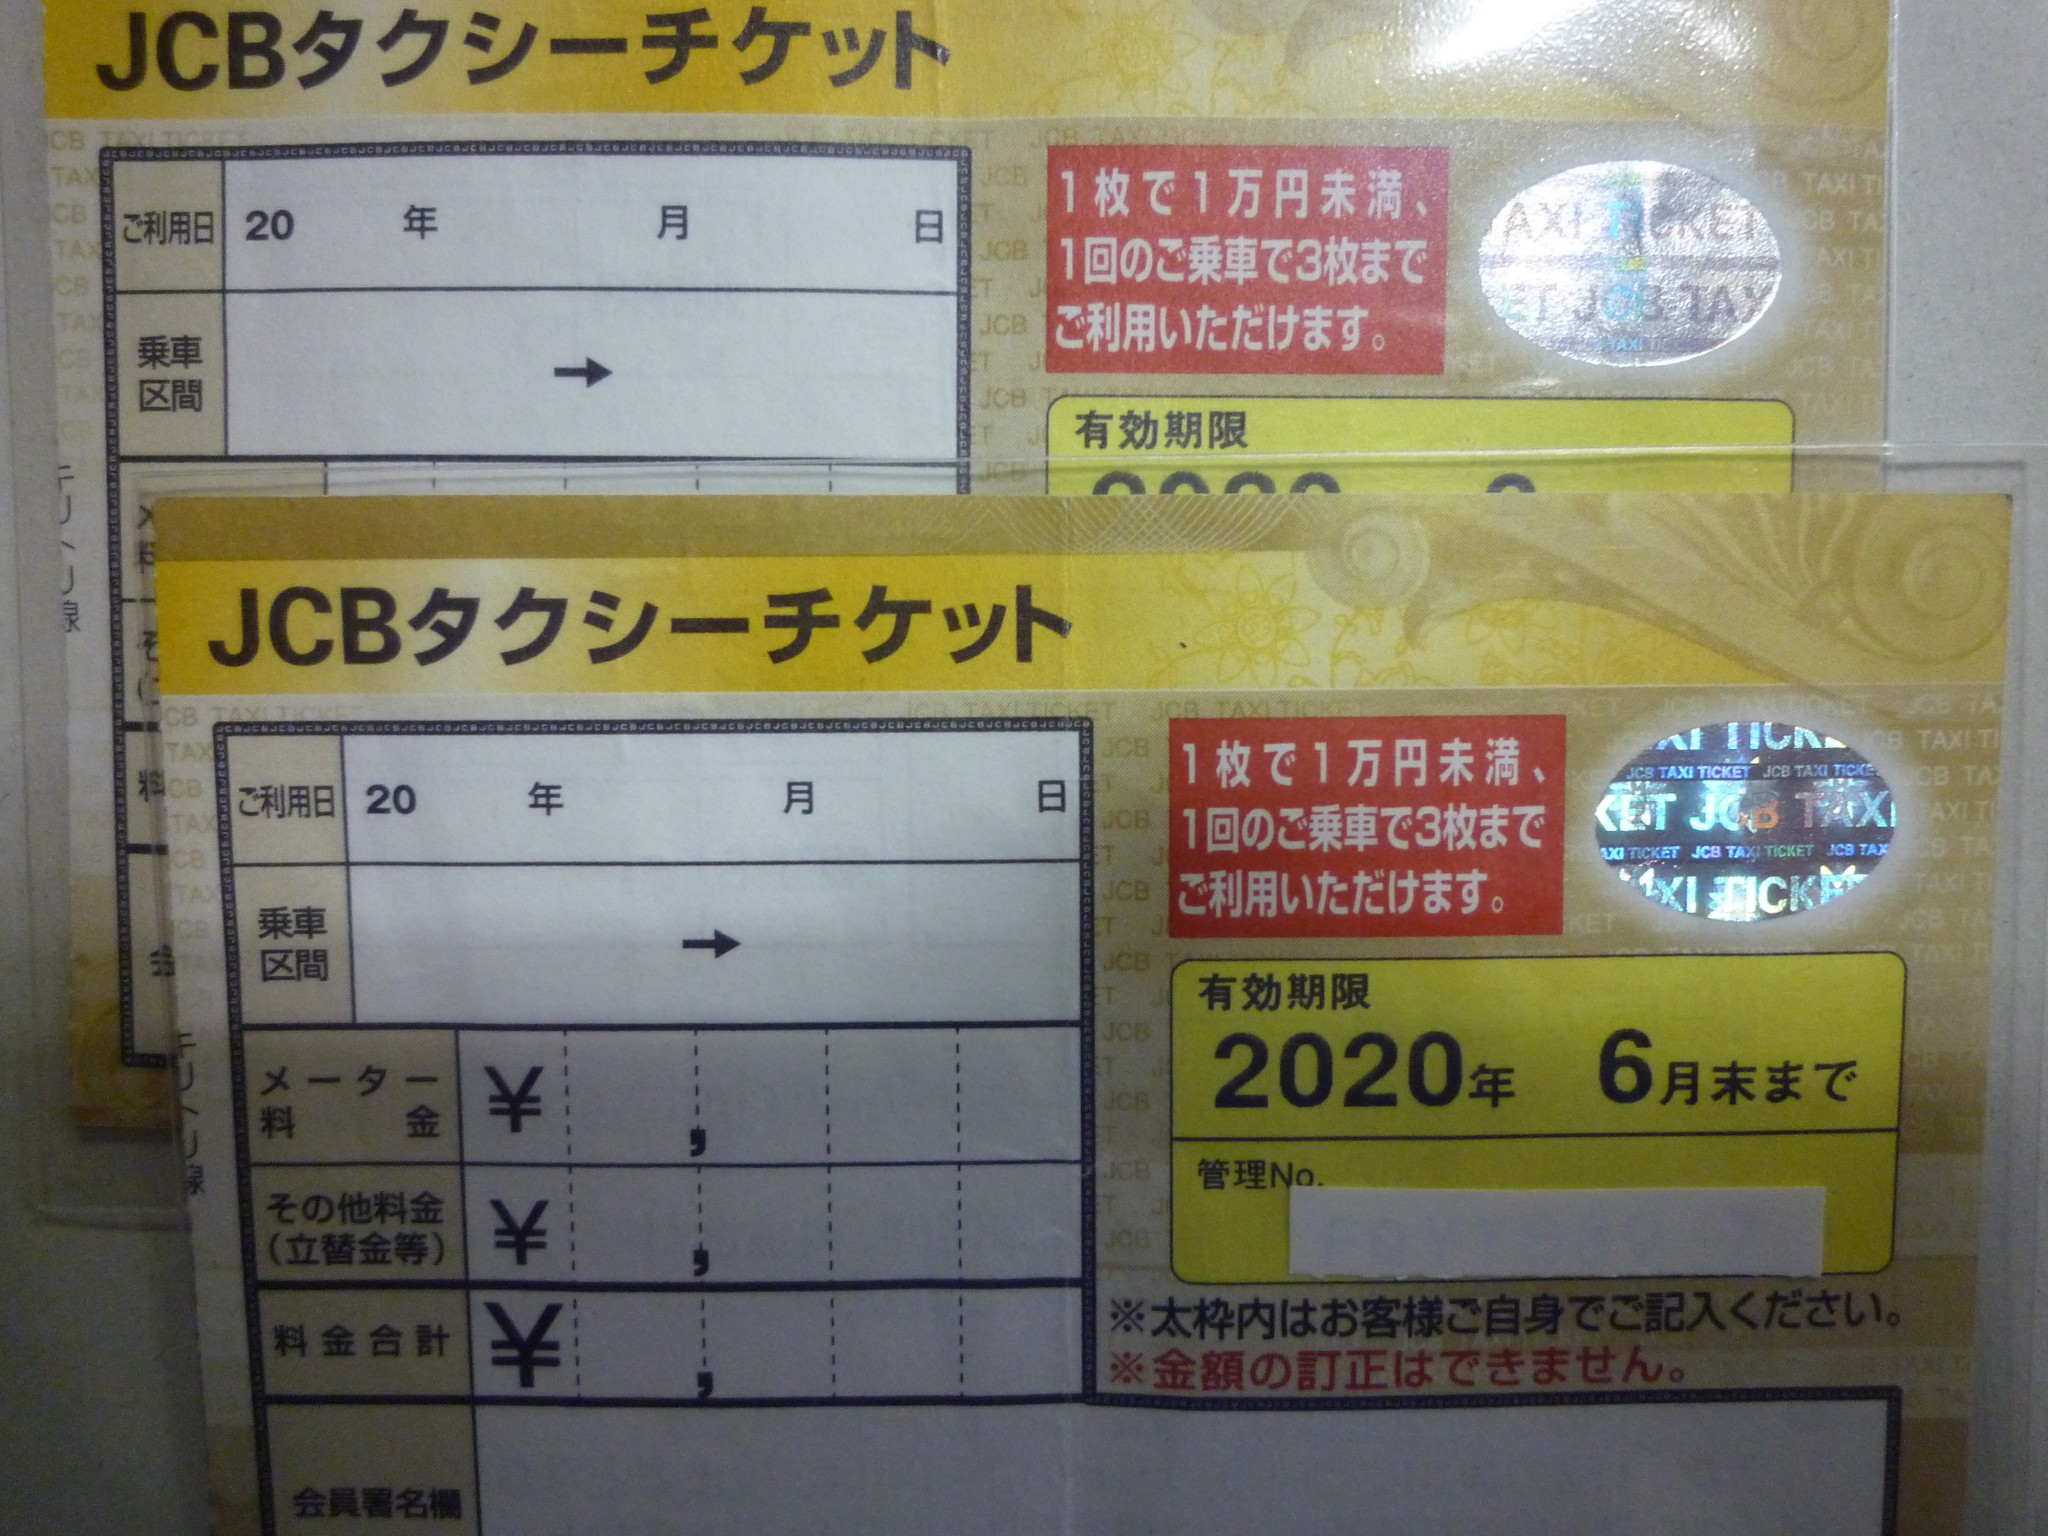 JCBタクシーチケット | 金券・切手・コインの買取と販売 | 札幌の金券ショップ | チェリースタンプ